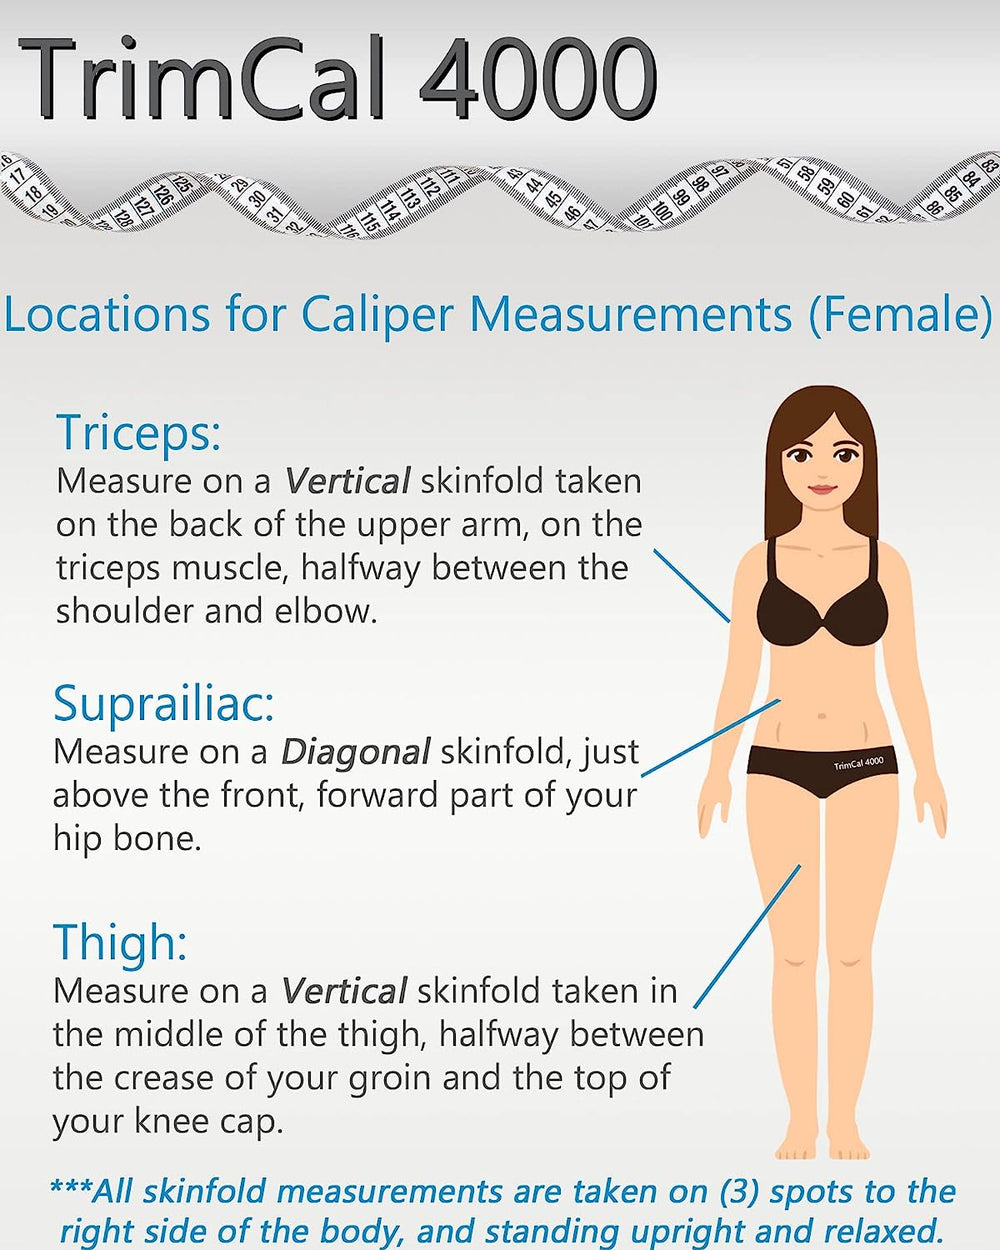 MEDca Body Fat Caliper Measuring Tape for Body Skinfold Calipers 